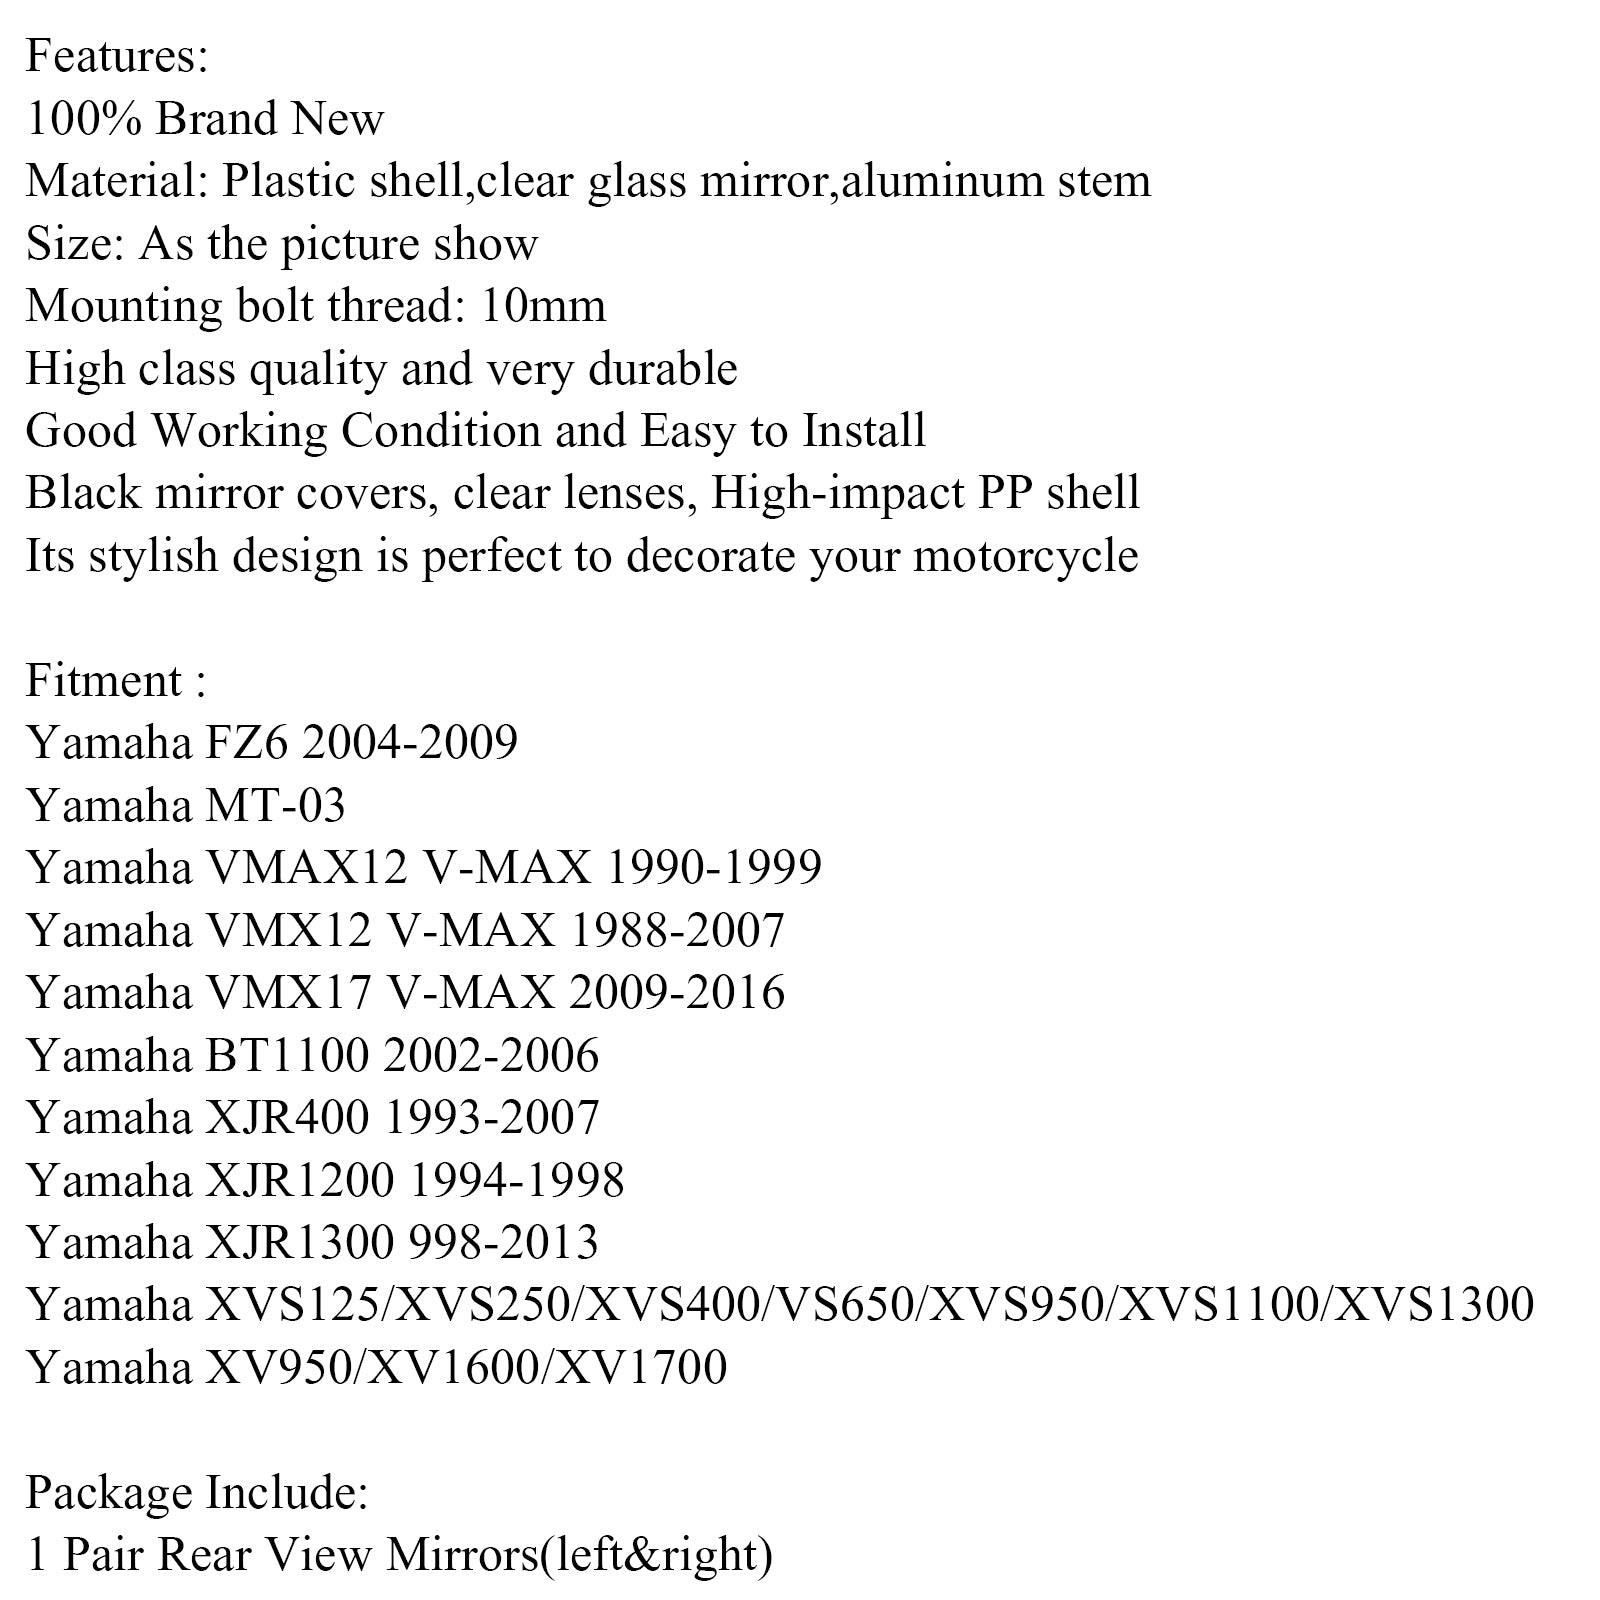 Motorrad-Rückspiegel für Yamaha V-MAX XJR1200 MT-03 FZ6 04-09 XV950
Generisch